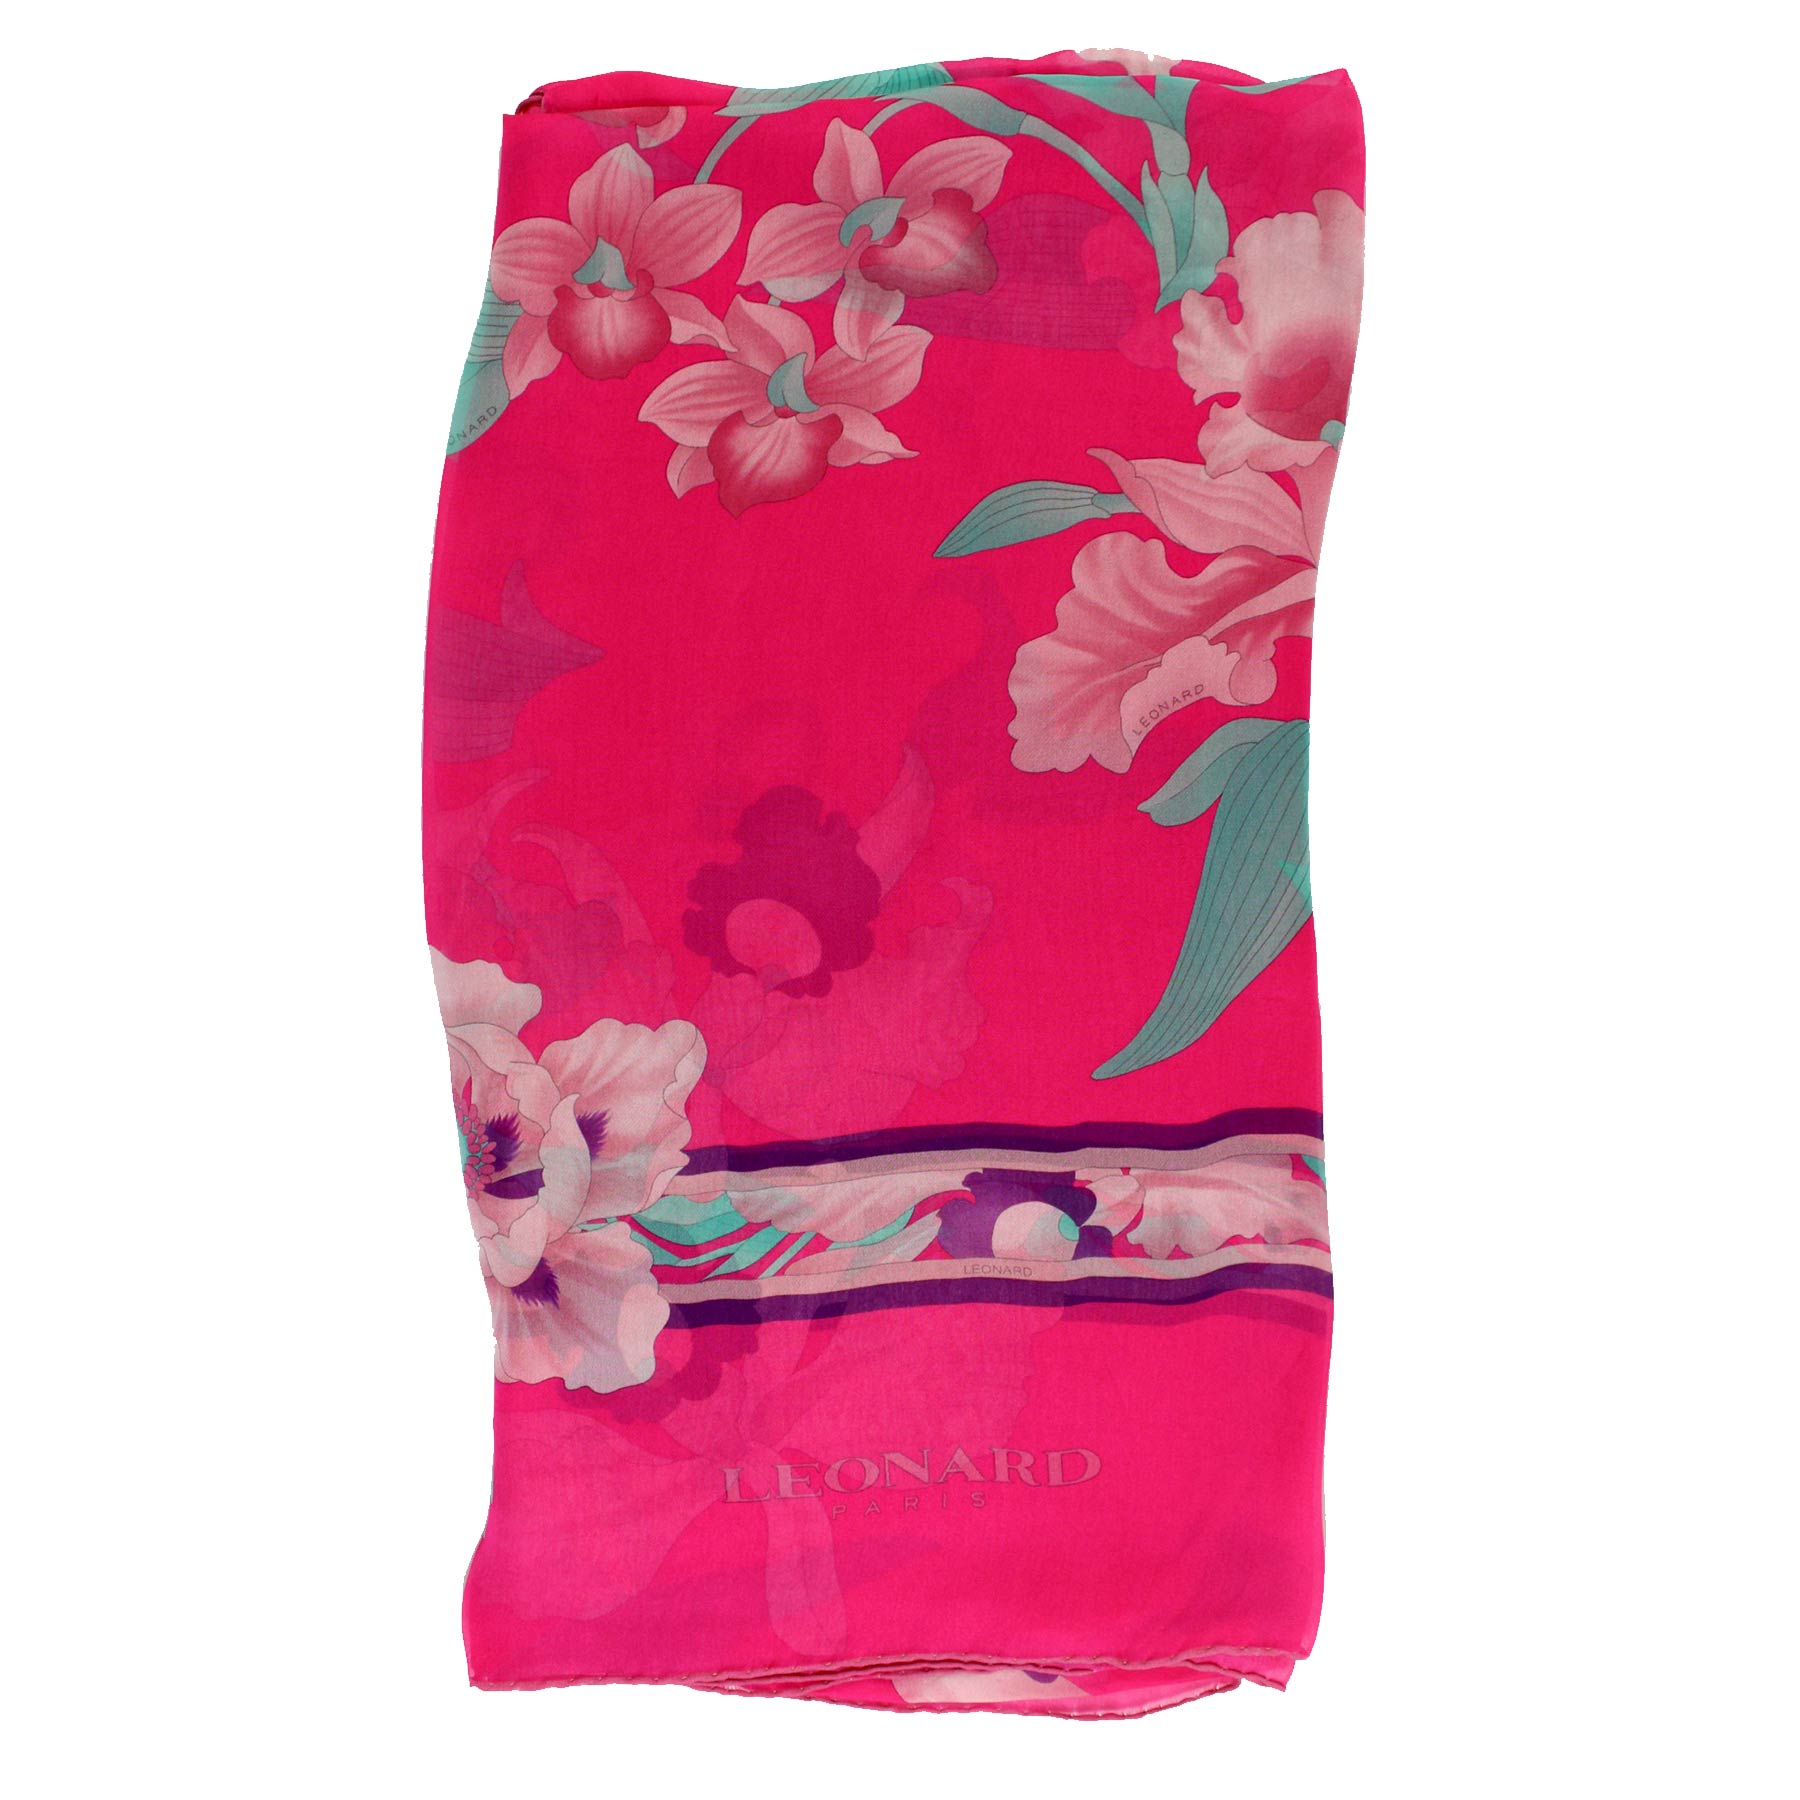 Leonard Paris Scarf Pink Aqua Floral Design - Chiffon Silk Shawl